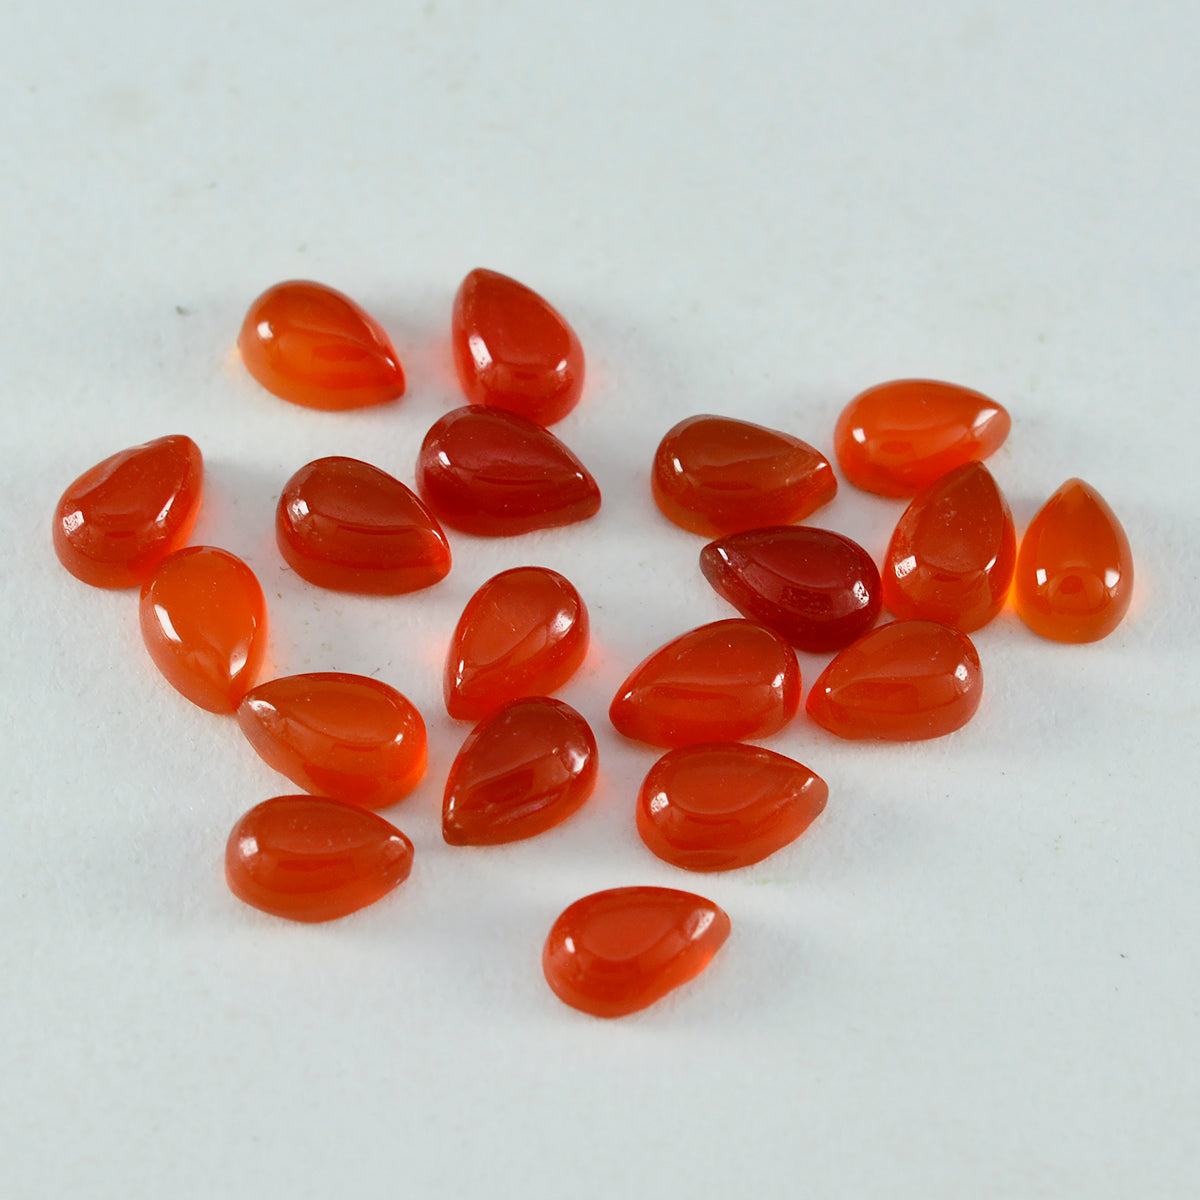 Riyogems 1PC Red Onyx Cabochon 4x6 mm Pear Shape pretty Quality Loose Stone